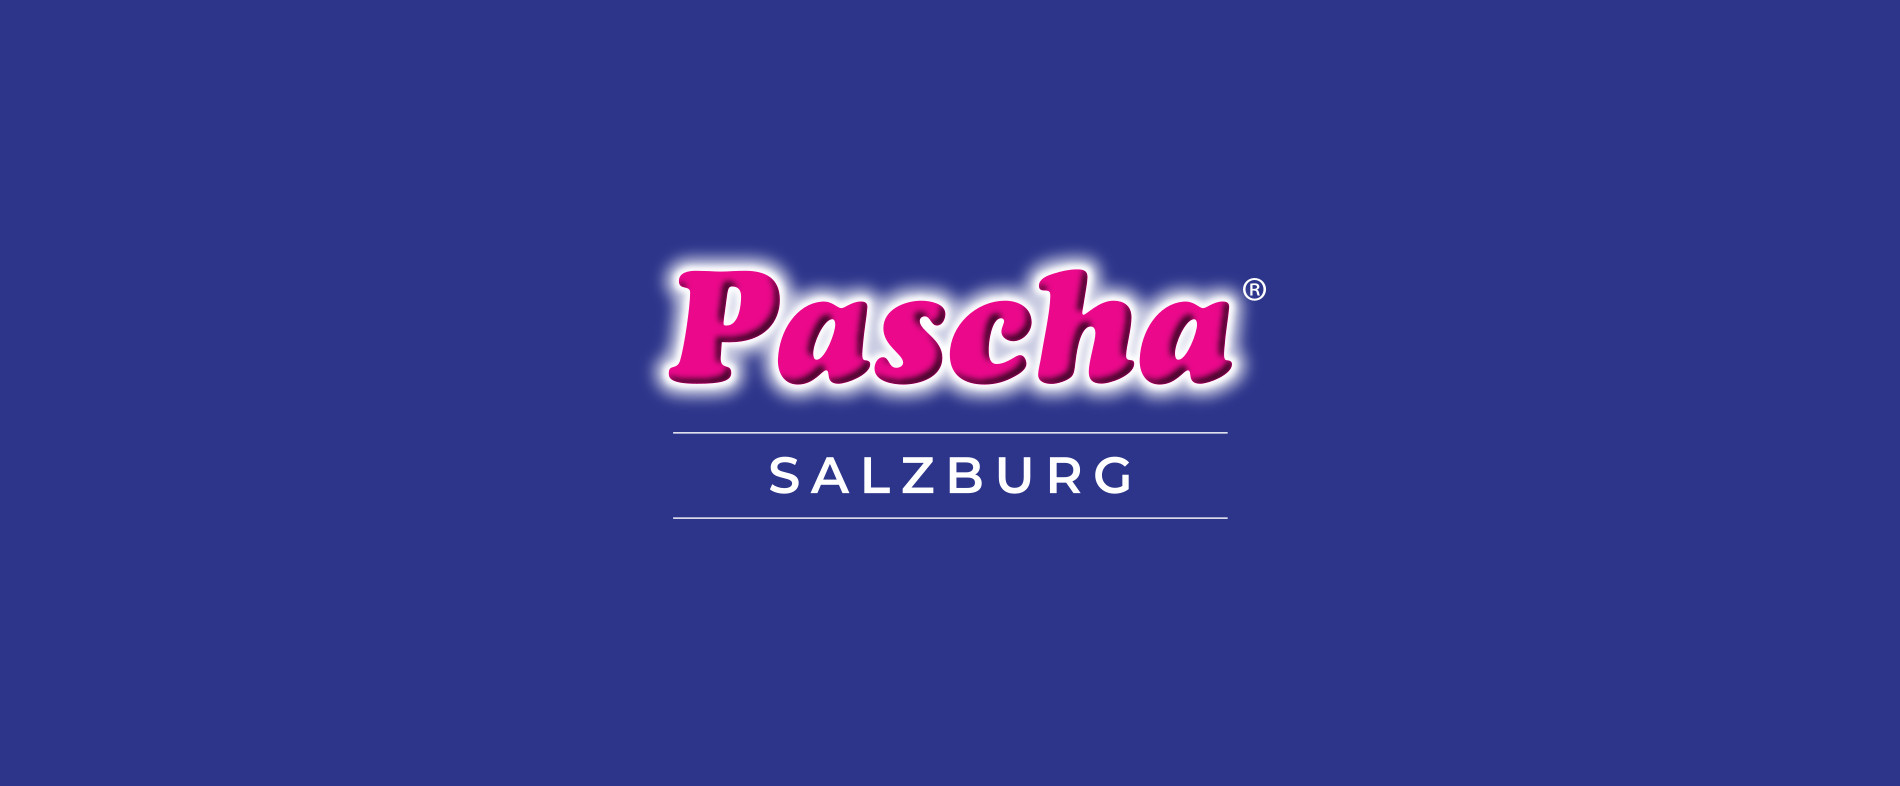 Pascha Salzburg